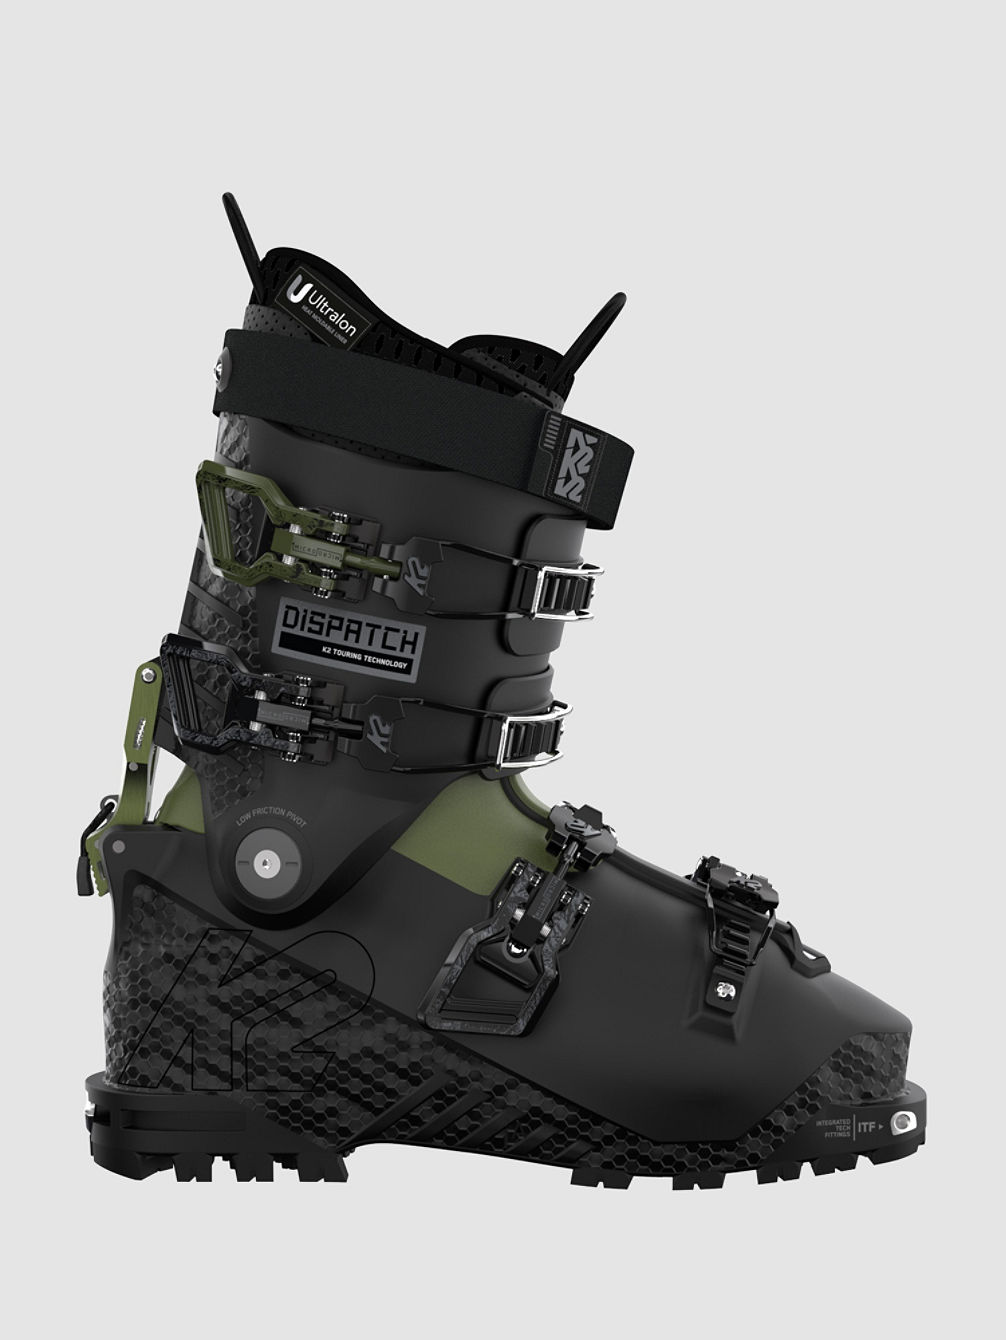 Dispatch 2023 Ski Boots